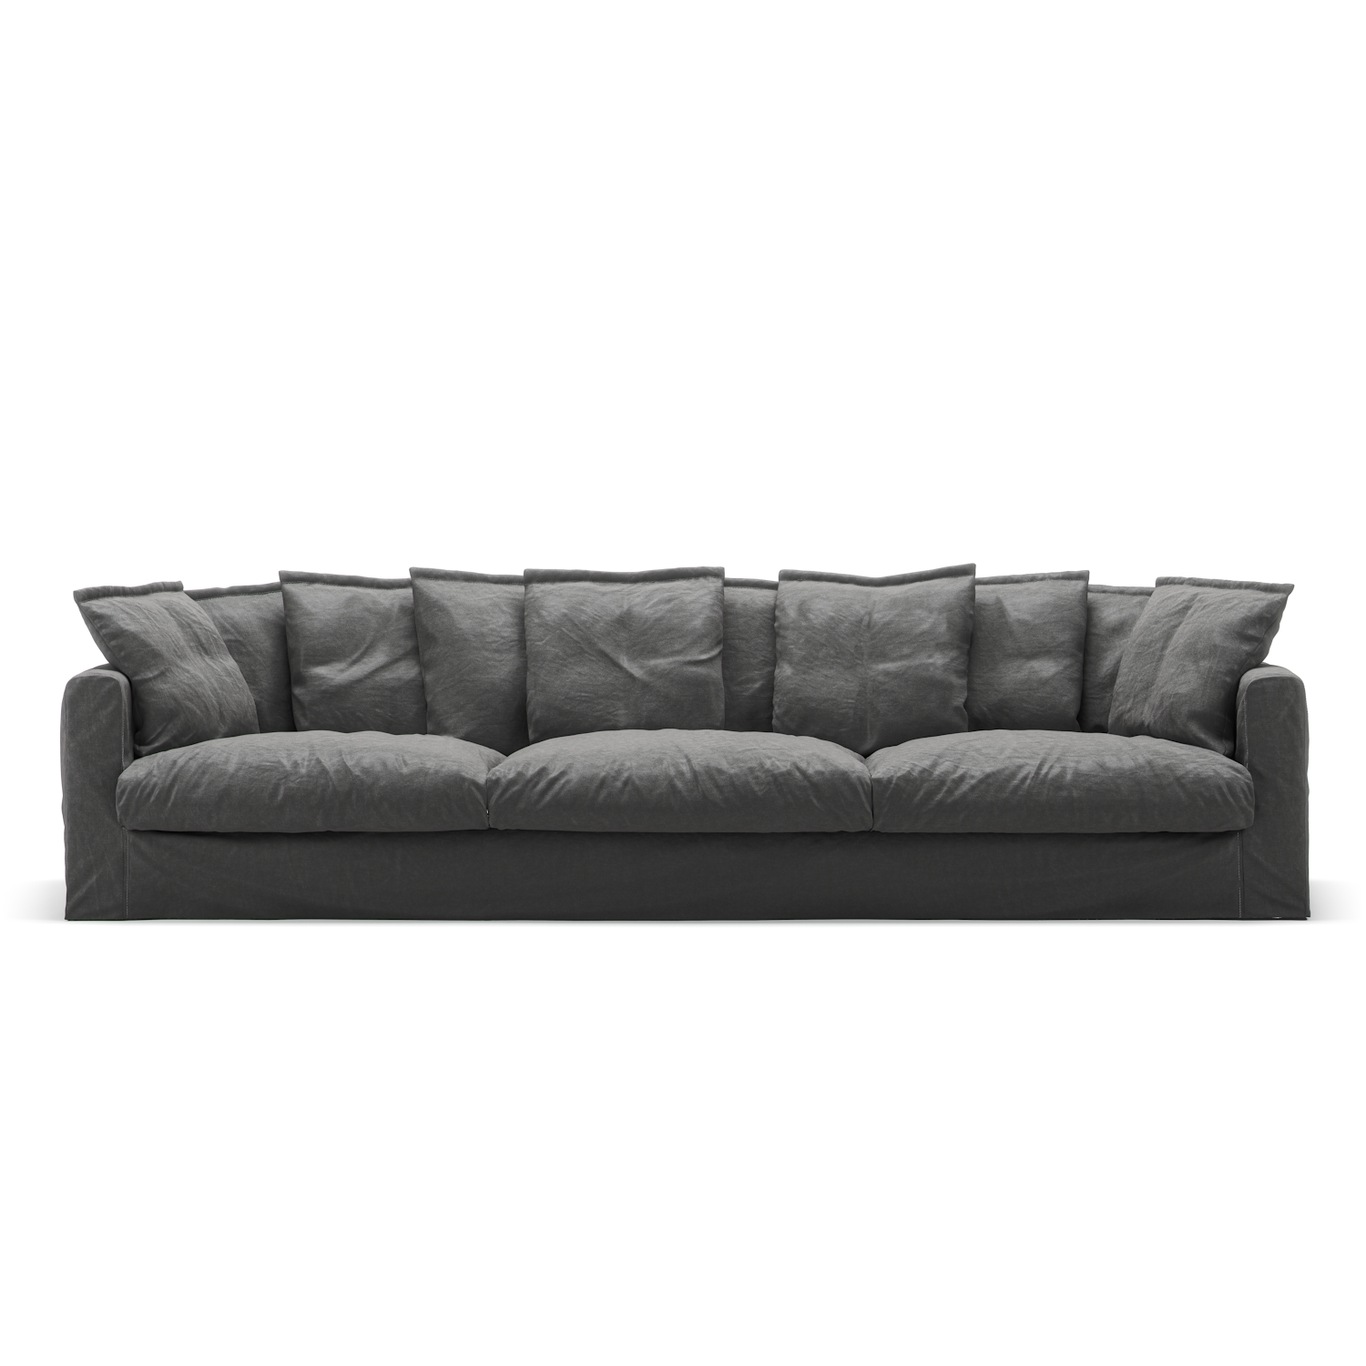 Le Grand Air 5-Sitzer-Sofa Leinen, Carbon Dust